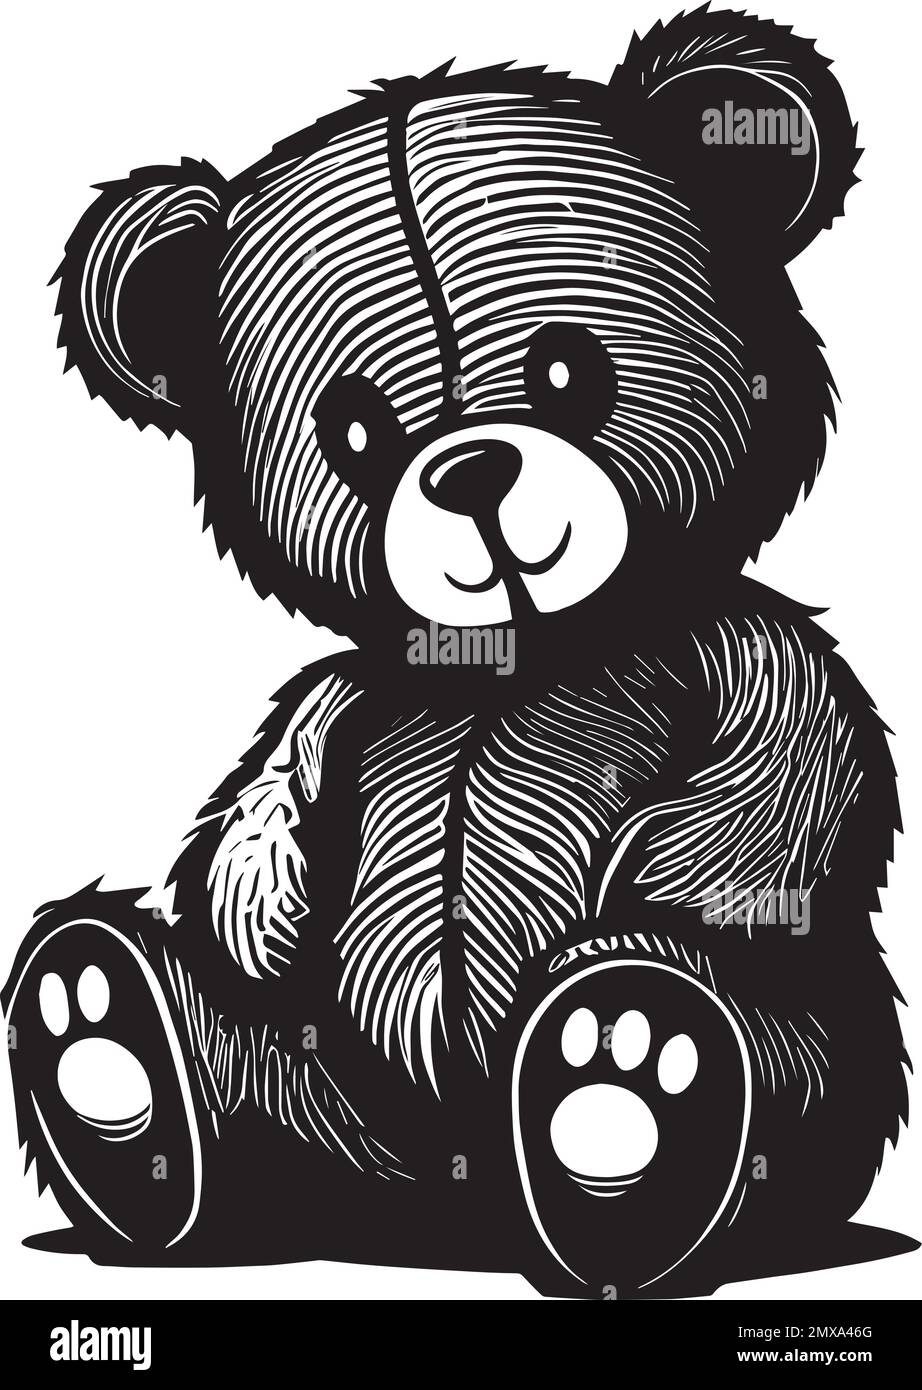 Cute Stuffed Teddy Bear Logo Design Stock Vector Image & Art - Alamy